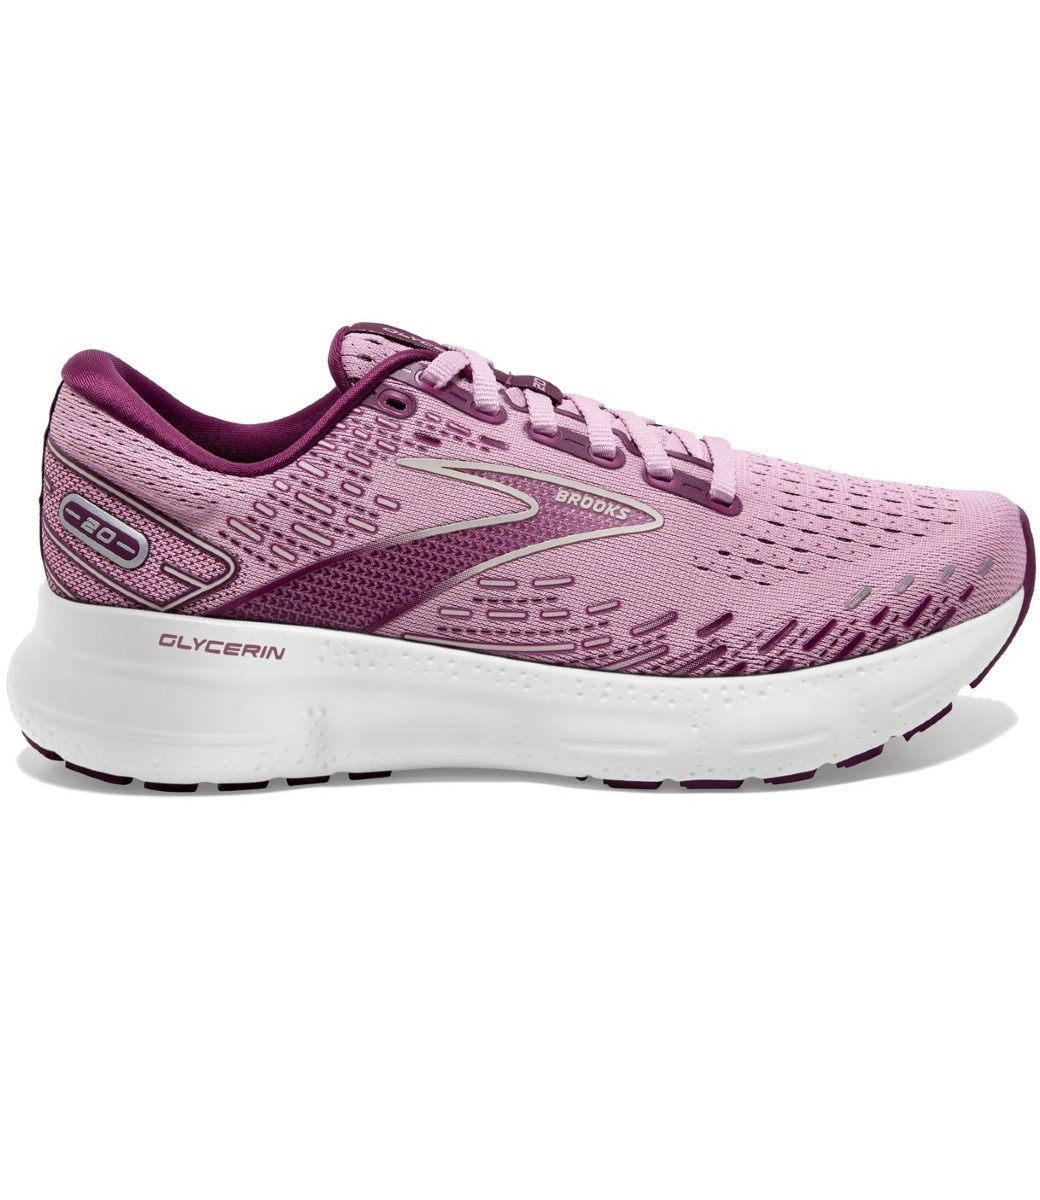 Brooks Glycerin 20 Sneaker Pink/Yellow/White (Women's)